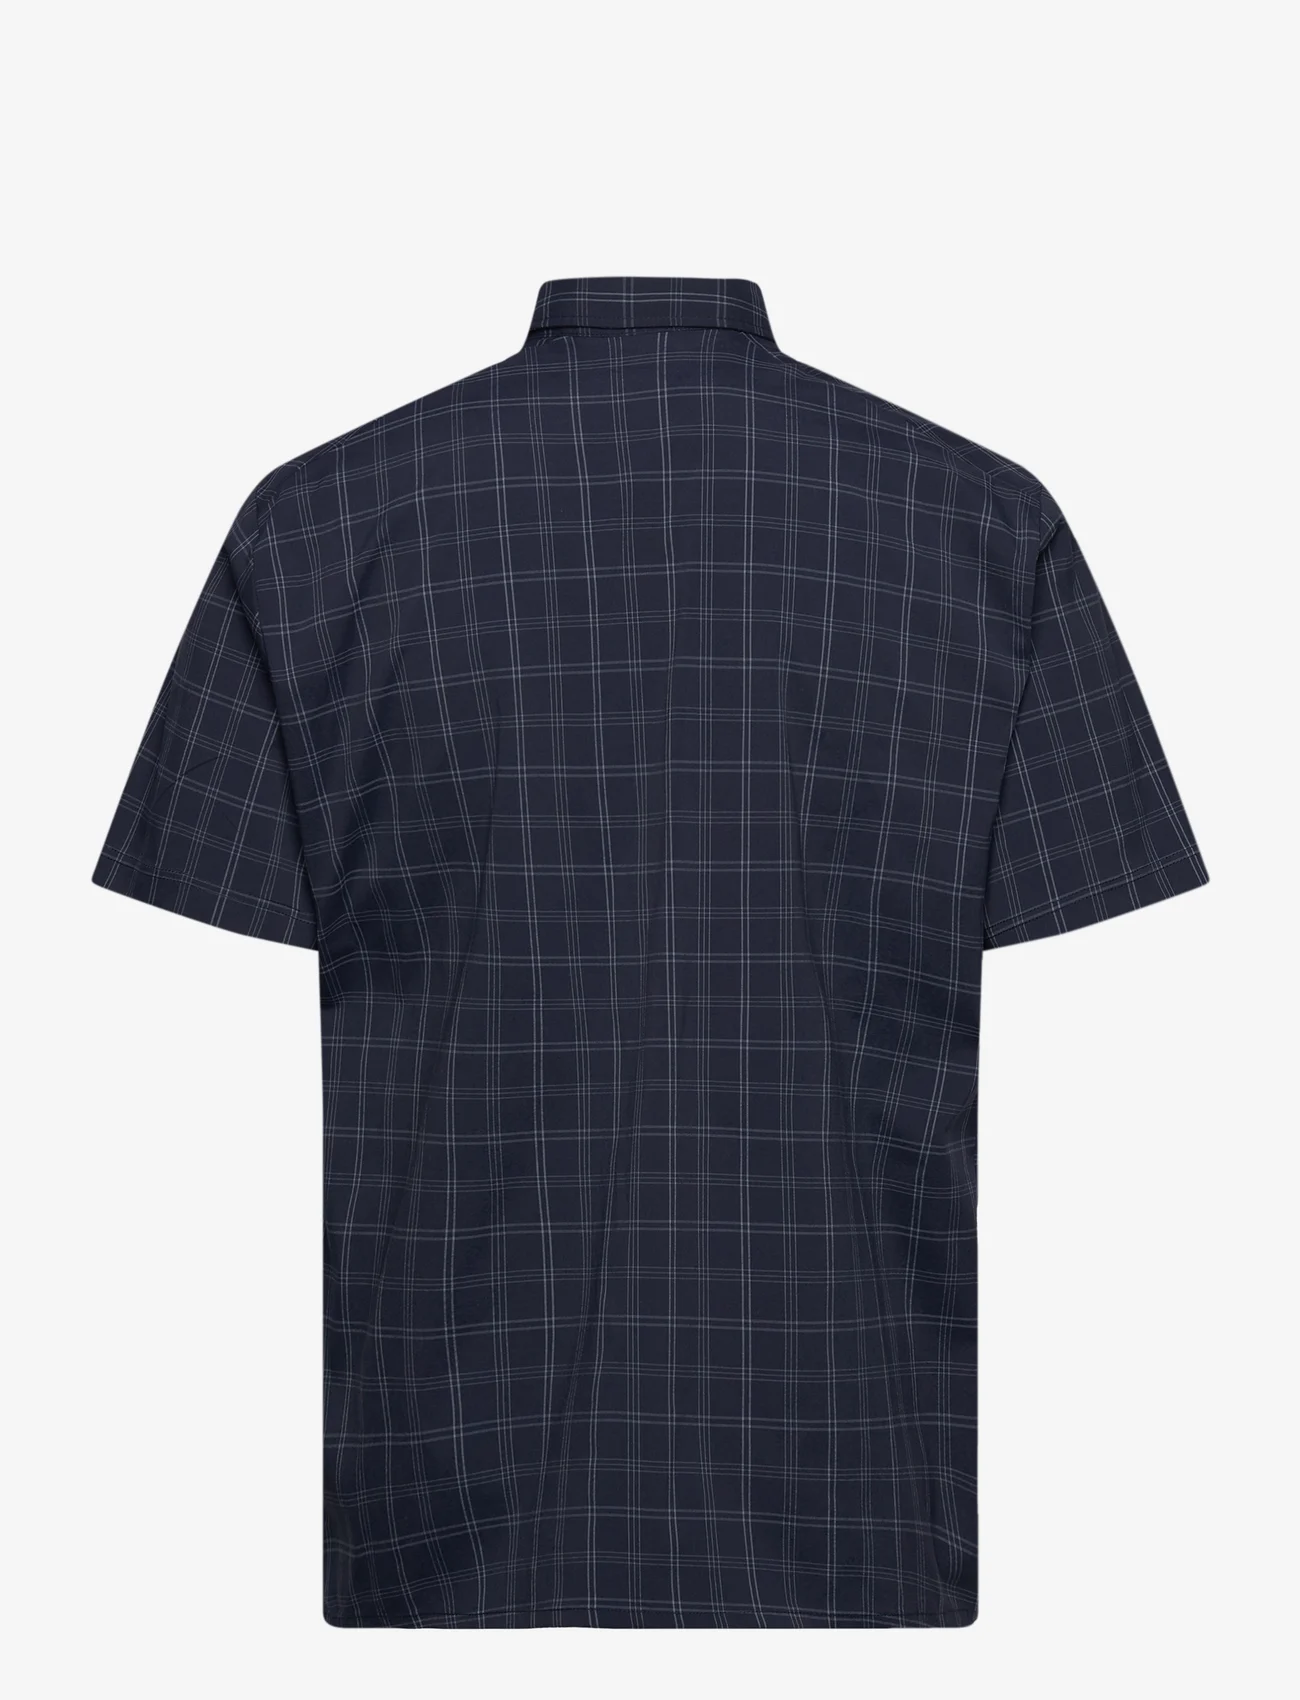 Jack Wolfskin - NORBO S/S SHIRT M - ternede skjorter - night blue checks - 1